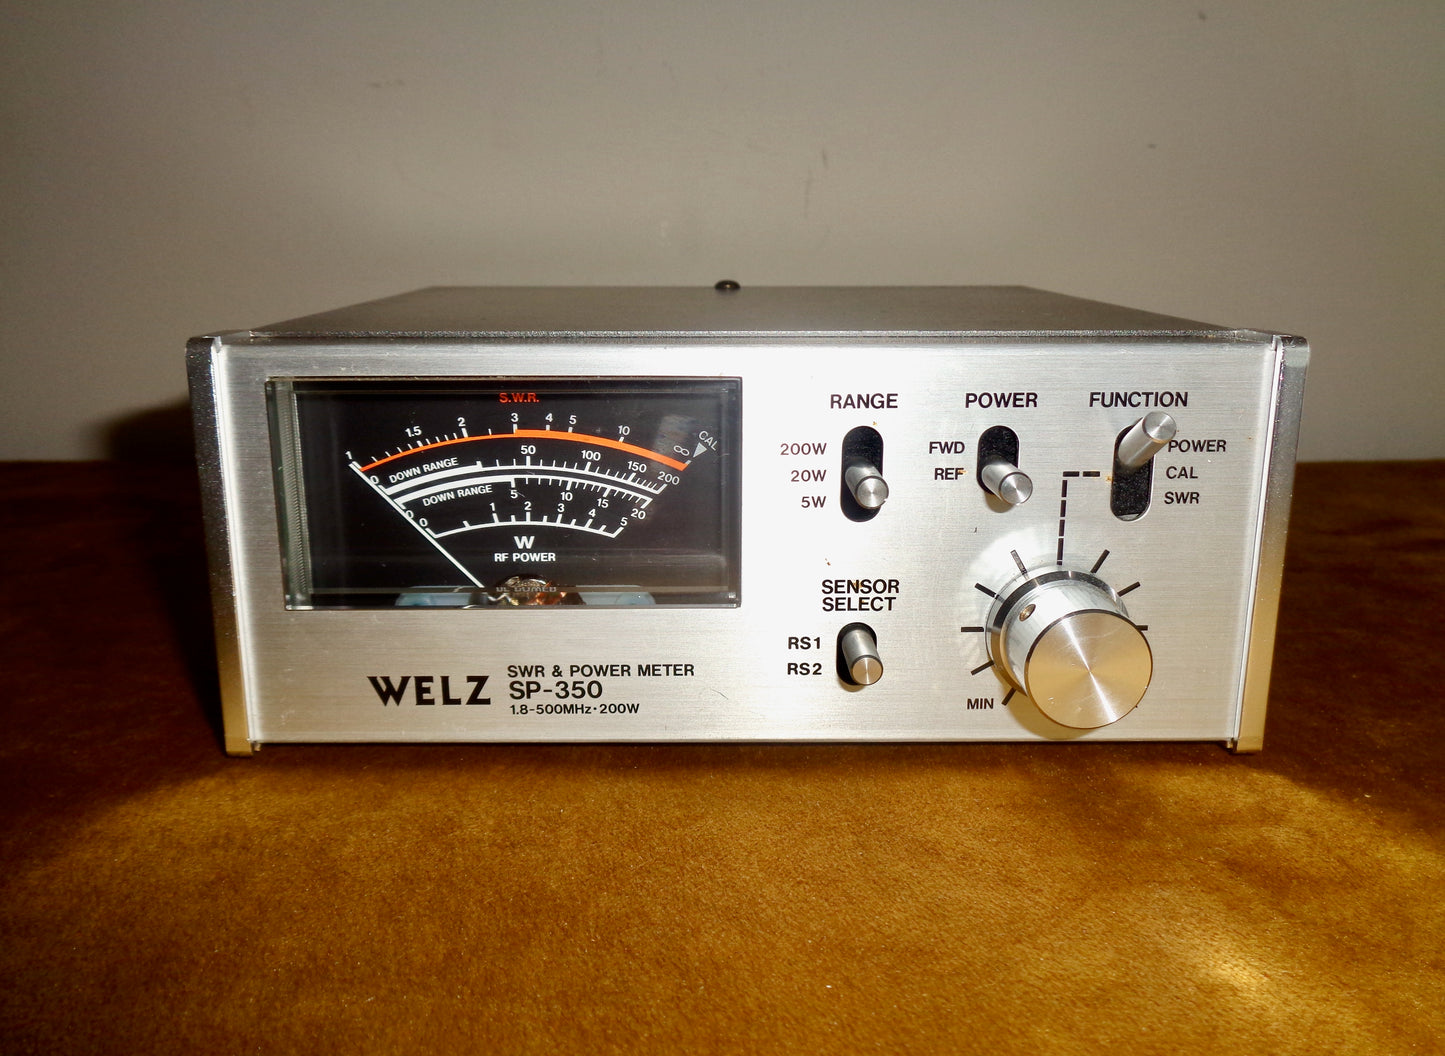 Welz SP 350 SWR and Power Meter 1.8-500MHz 200W 